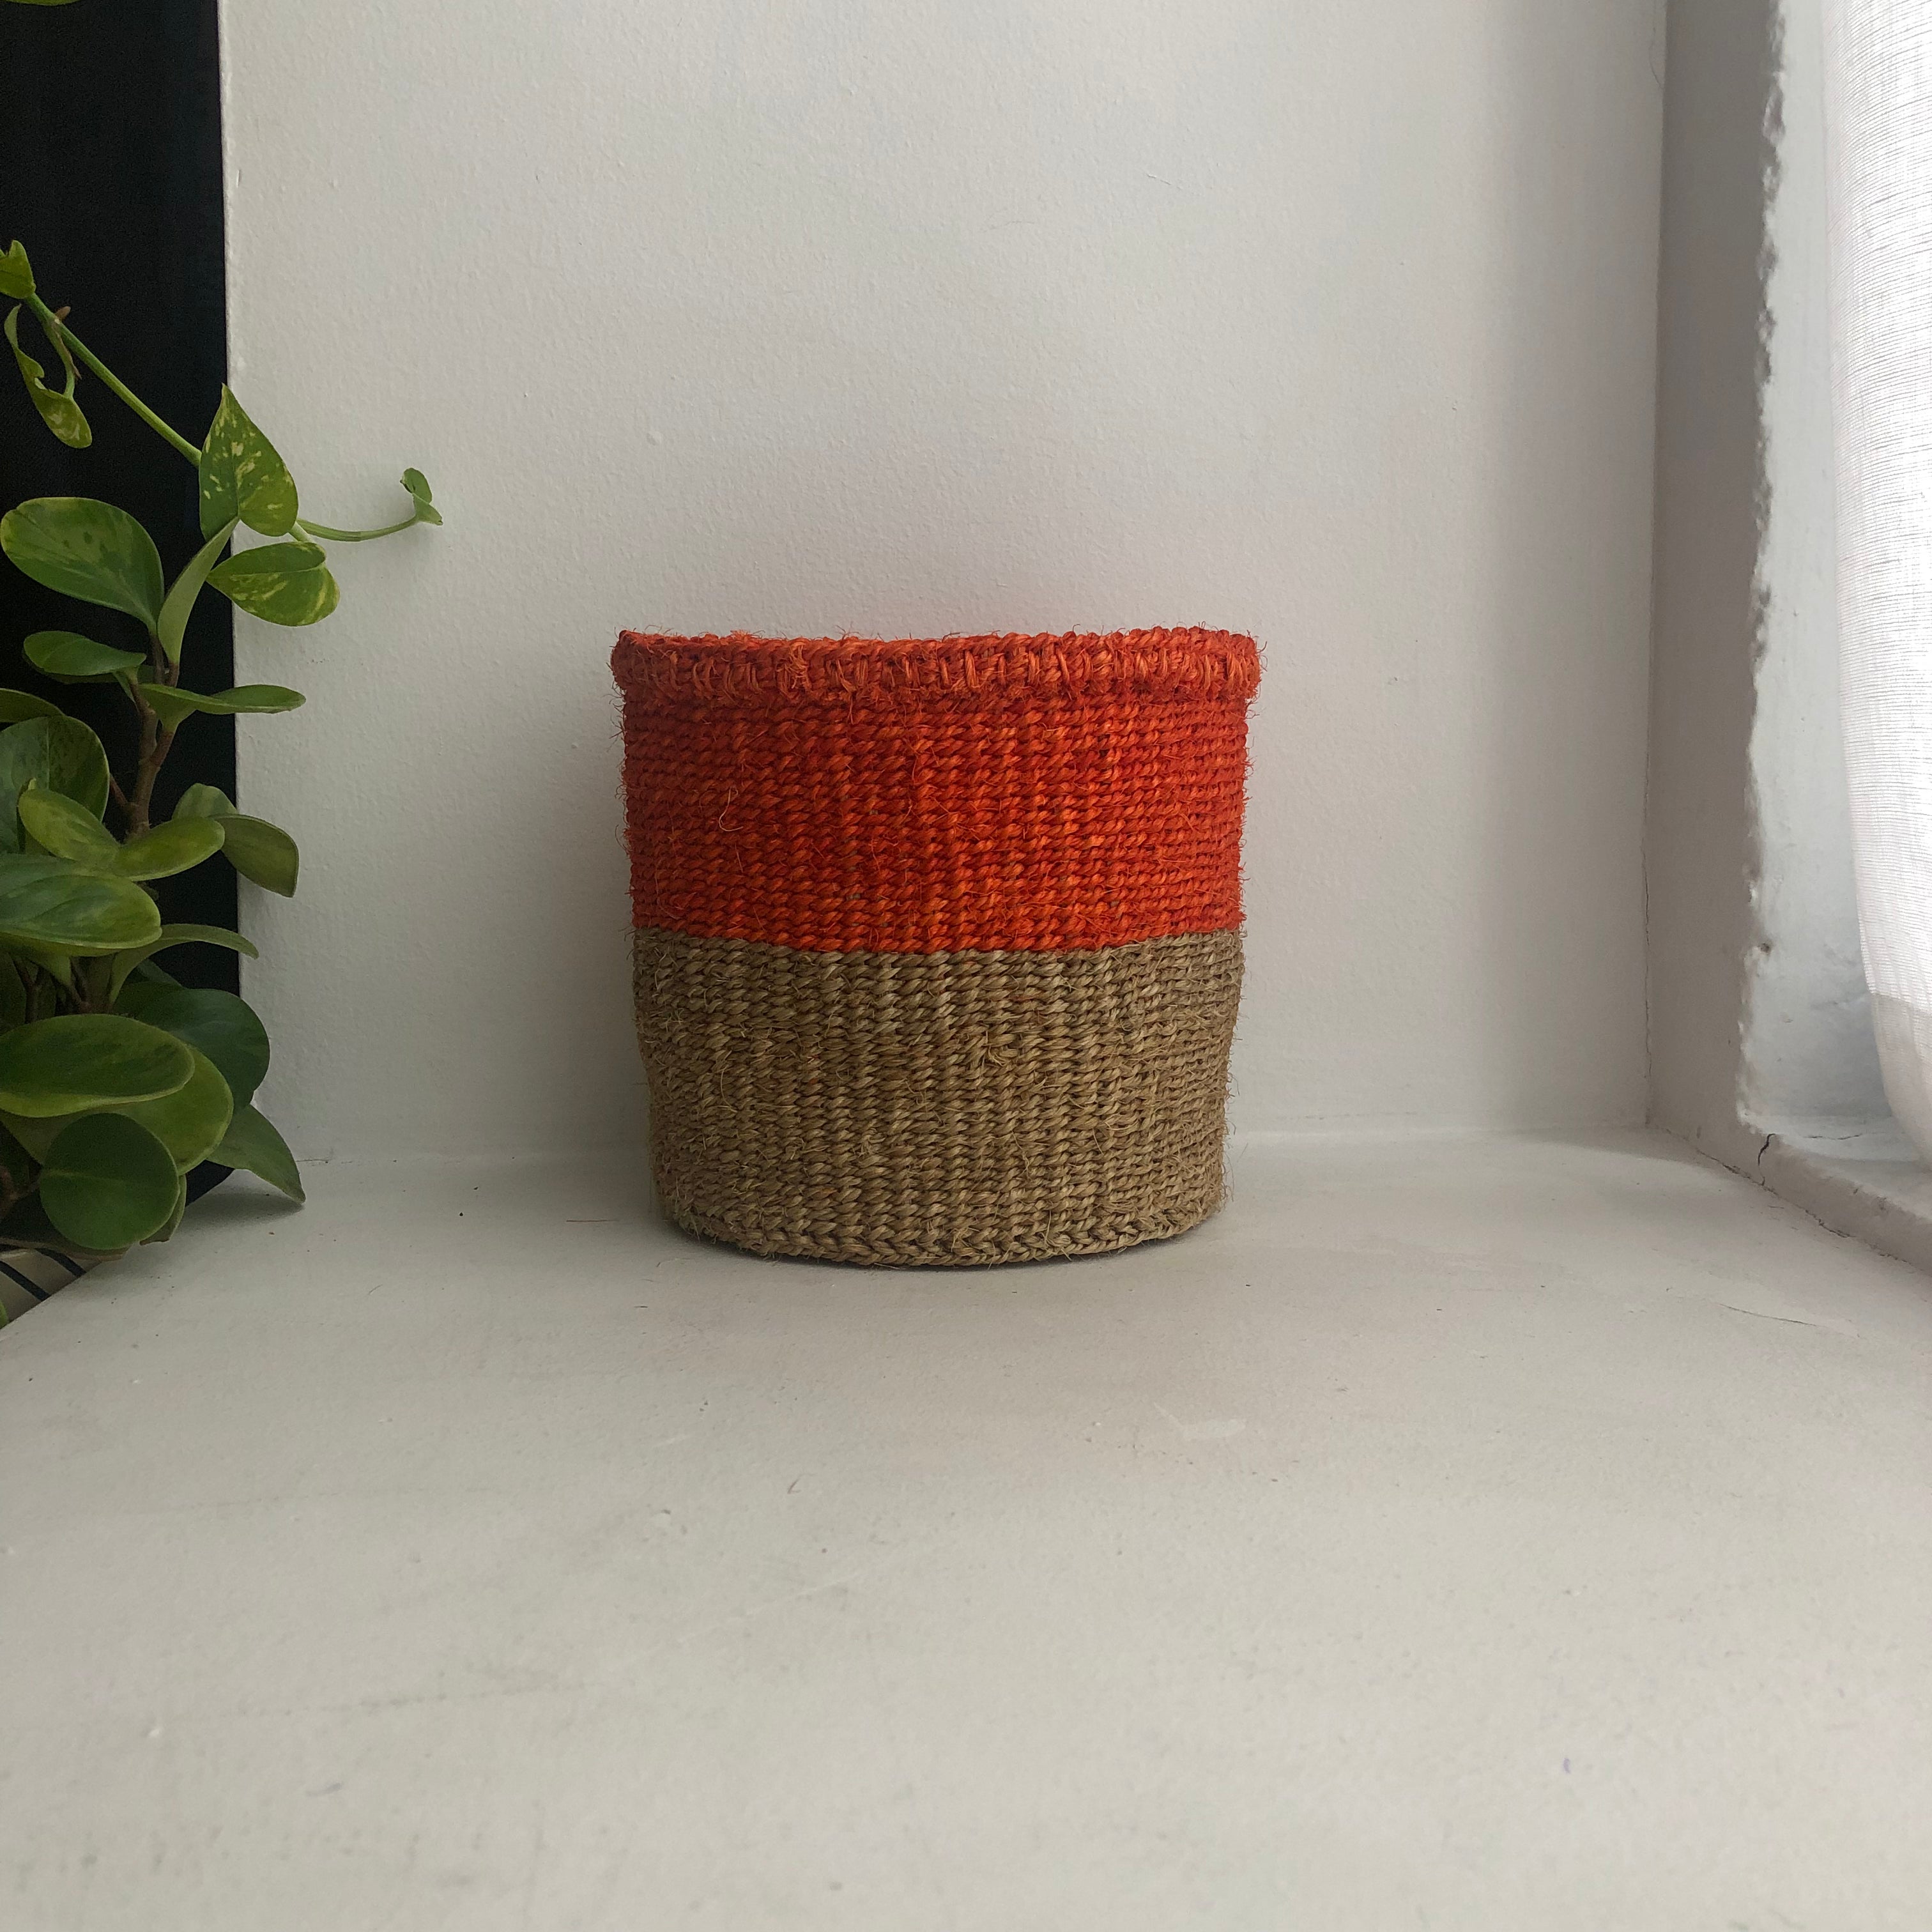 6" orange and natural basket